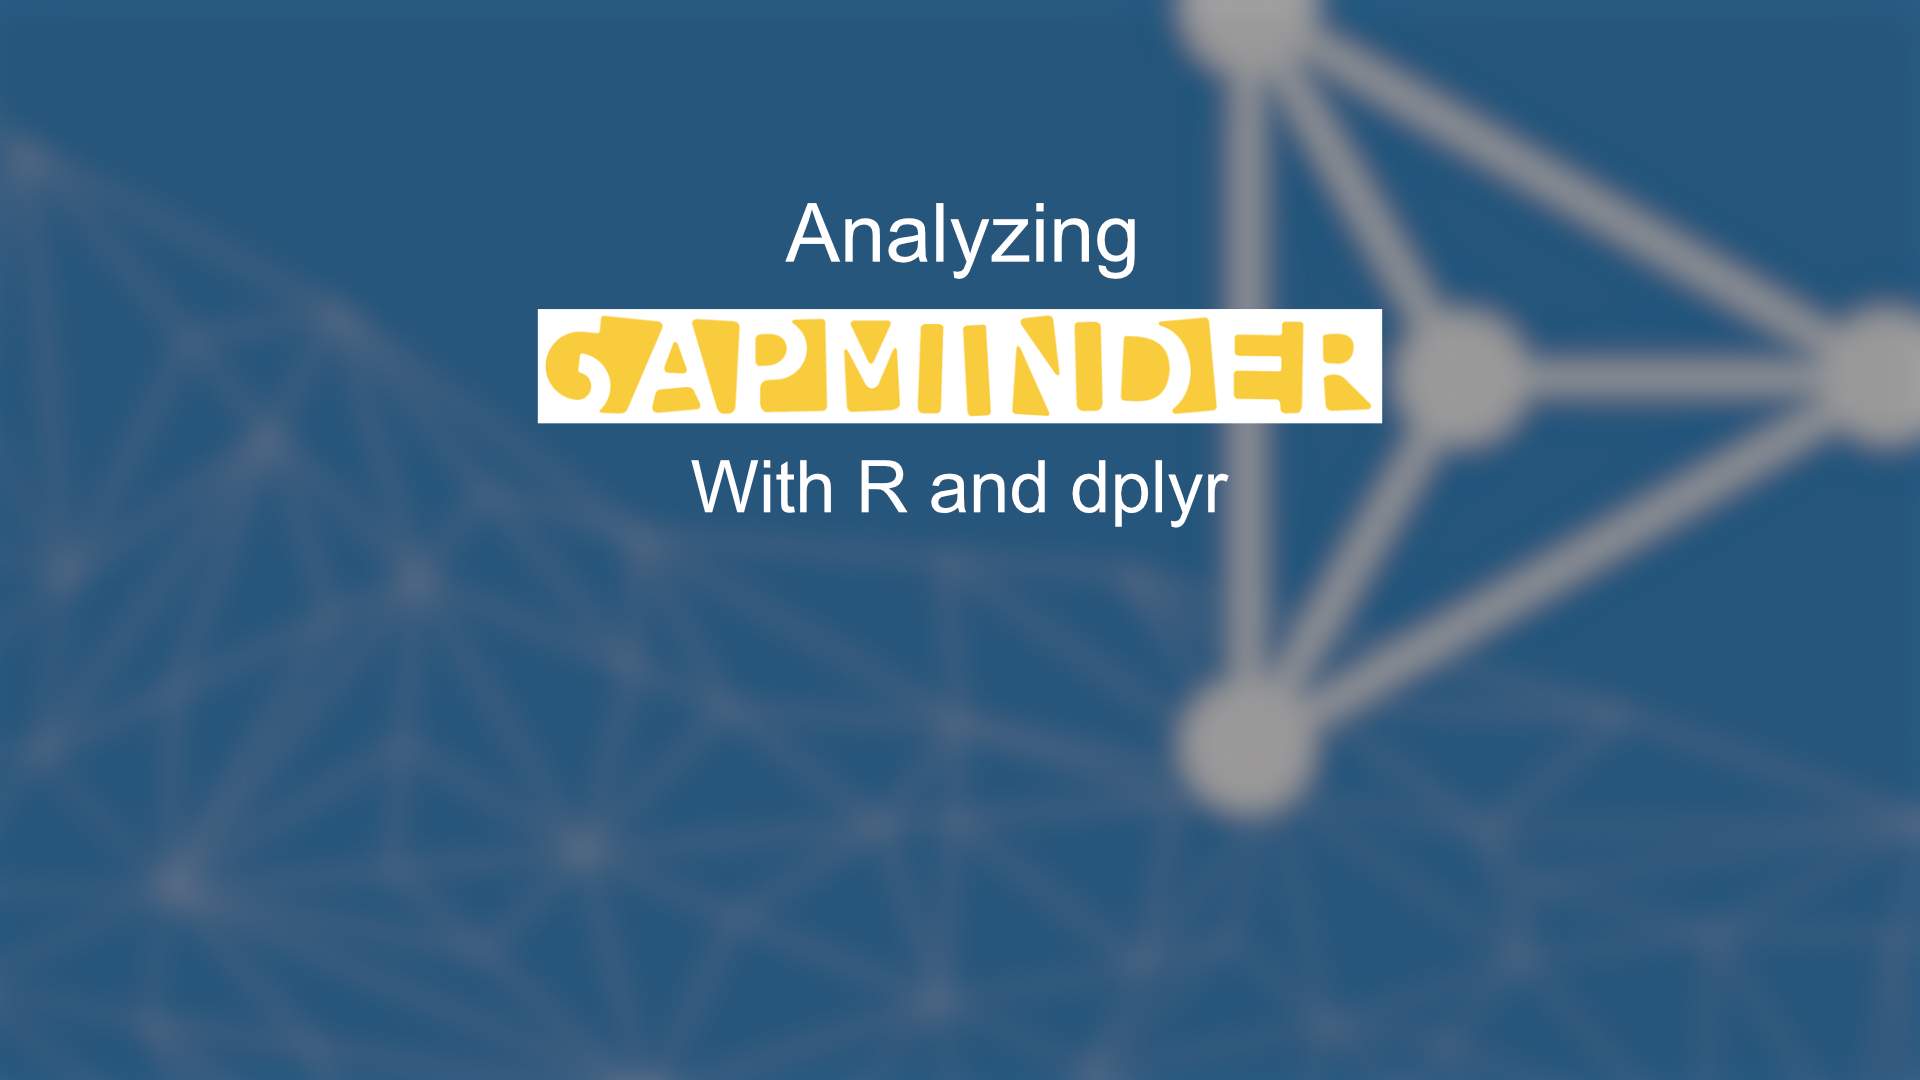 Analyzing Gapminder data with dplyr